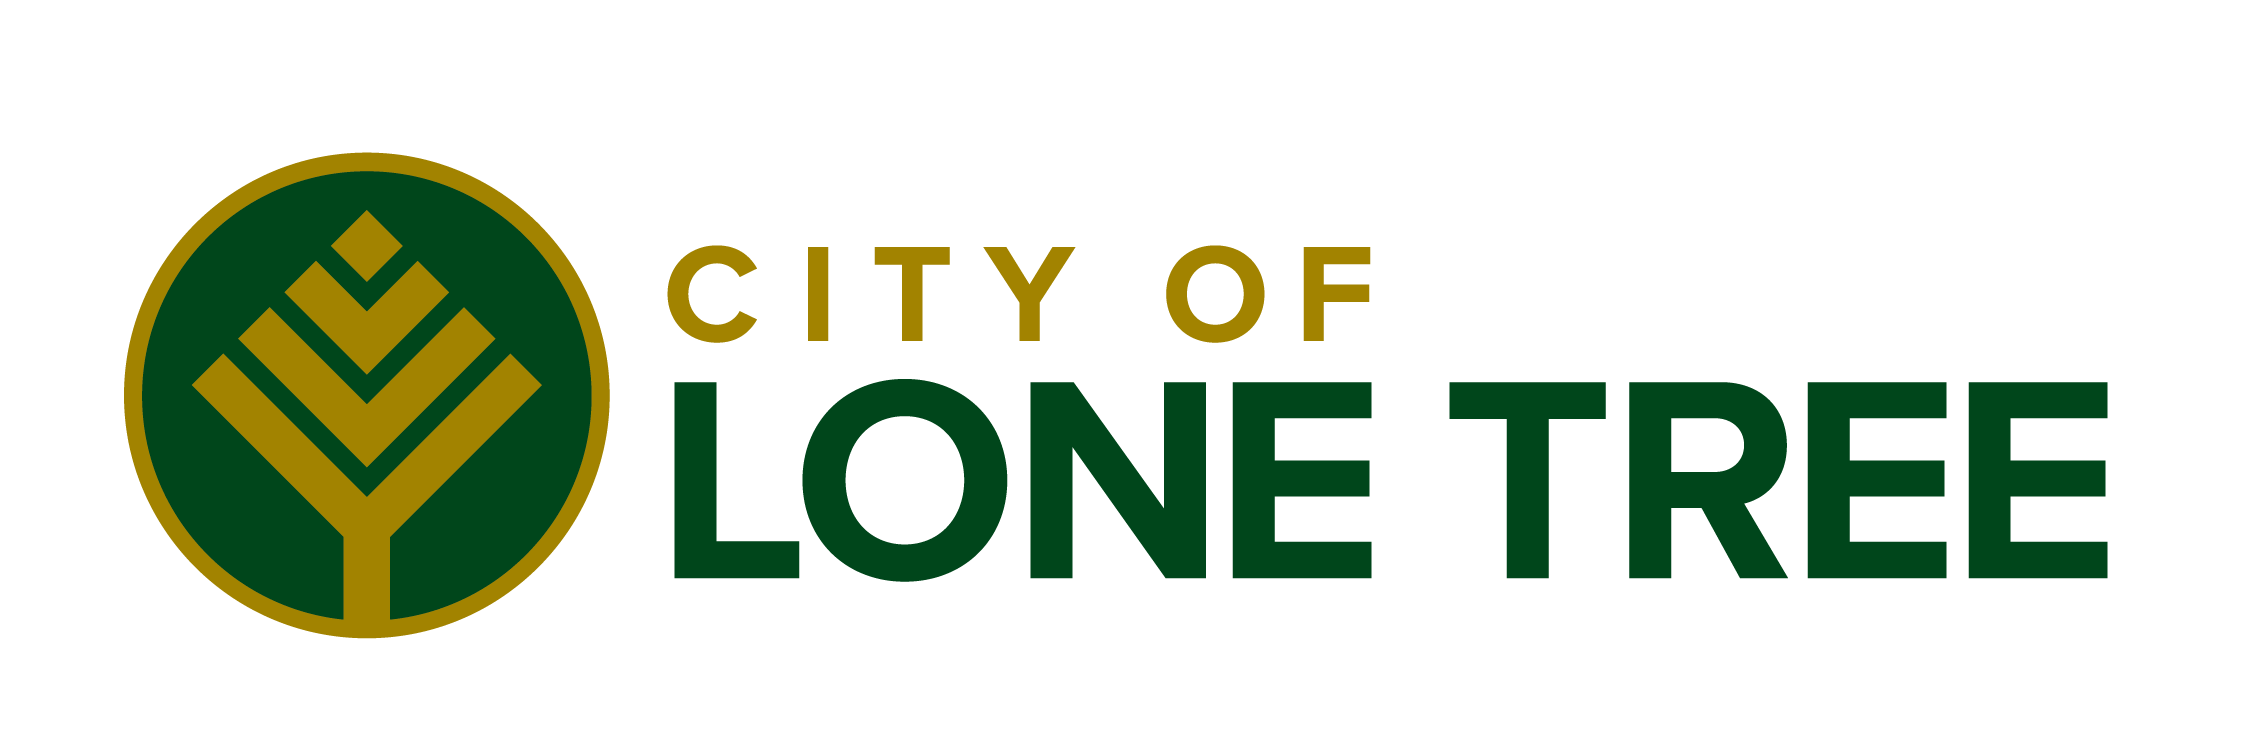 City of Lone Tree Volunteer Application Form